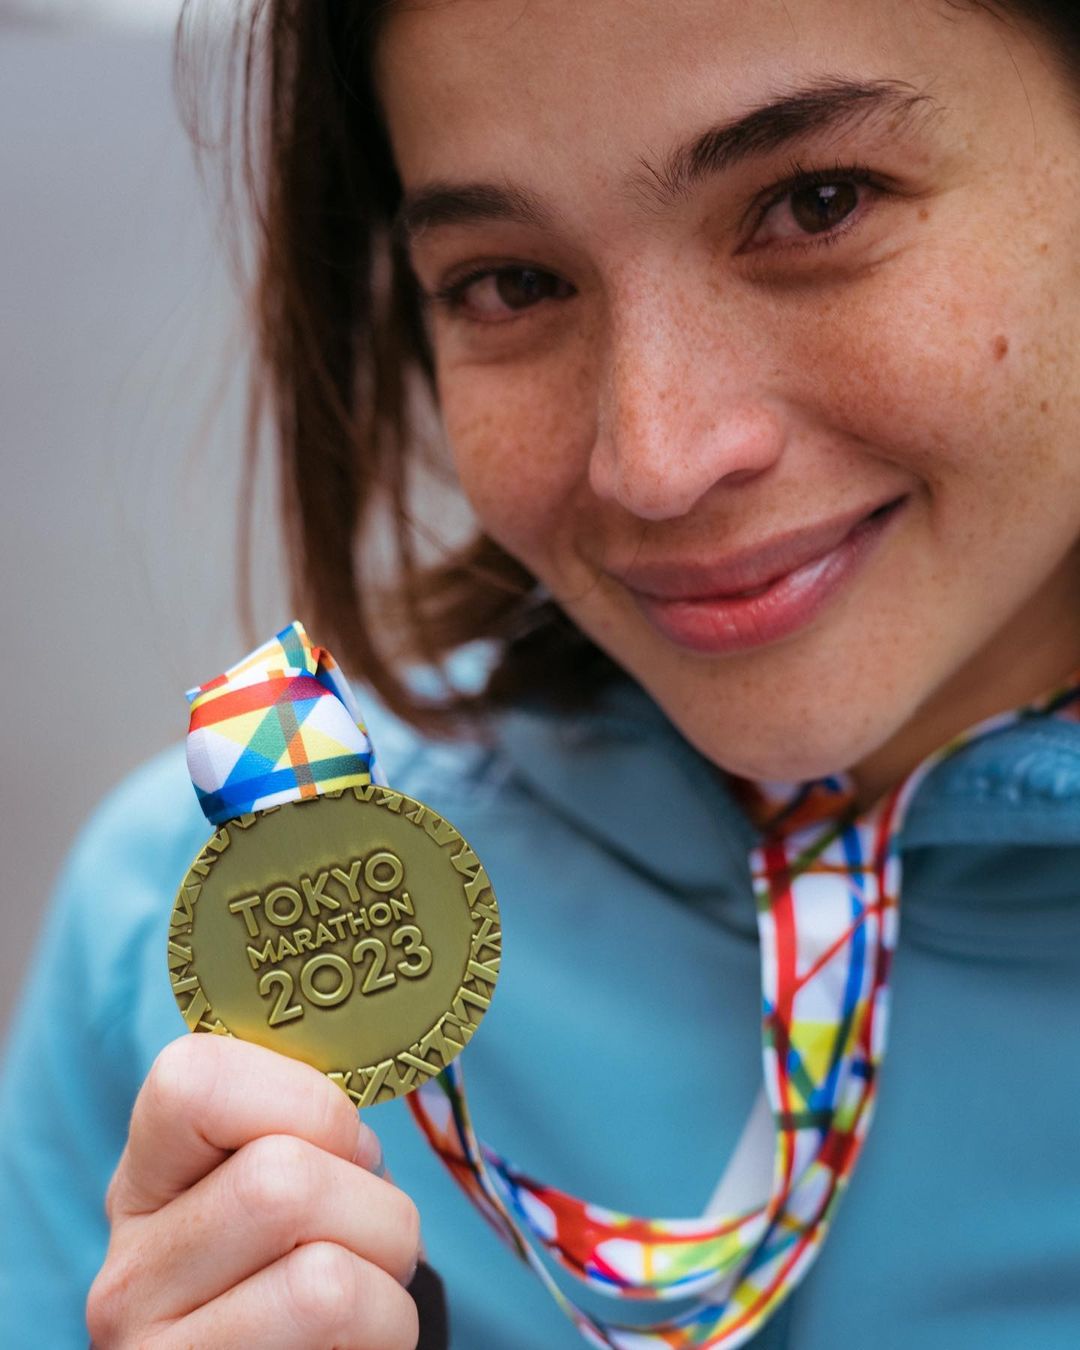 Anne Curtis with her Tokyo Marathon 2023 medal